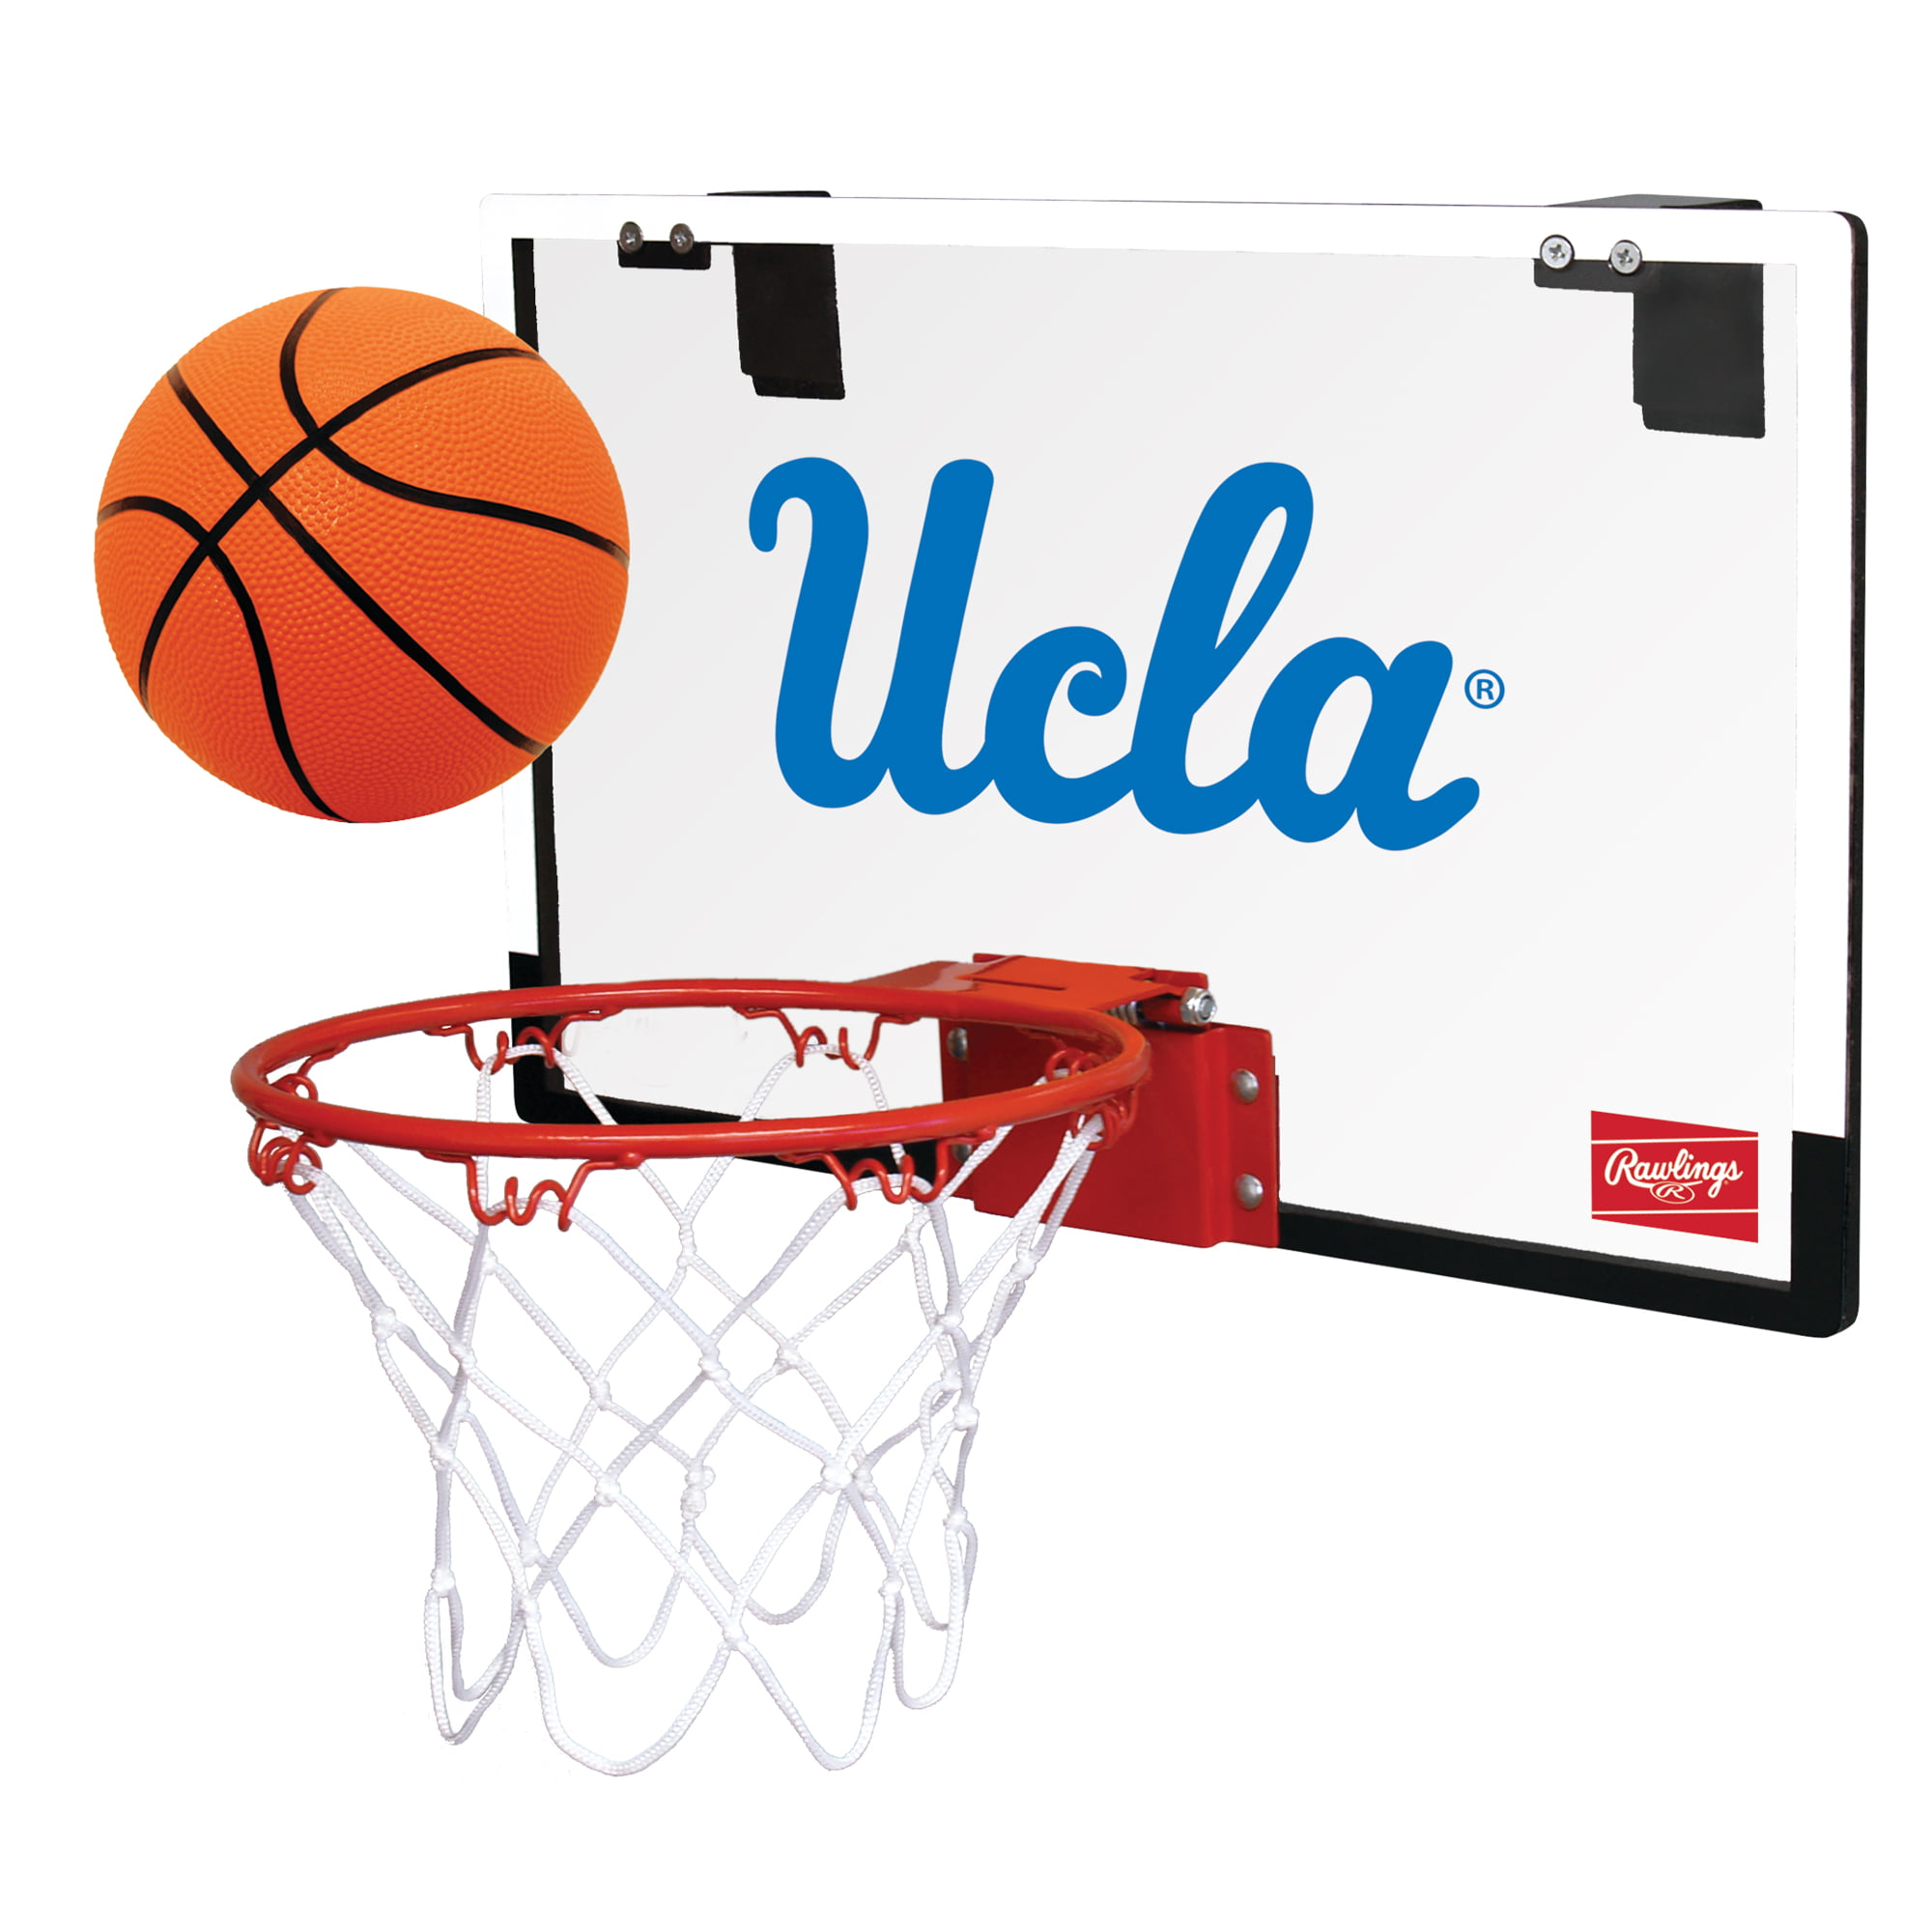 NCAA UCLA Bruins Triple Threat Full Size Basketball by Rawlings 